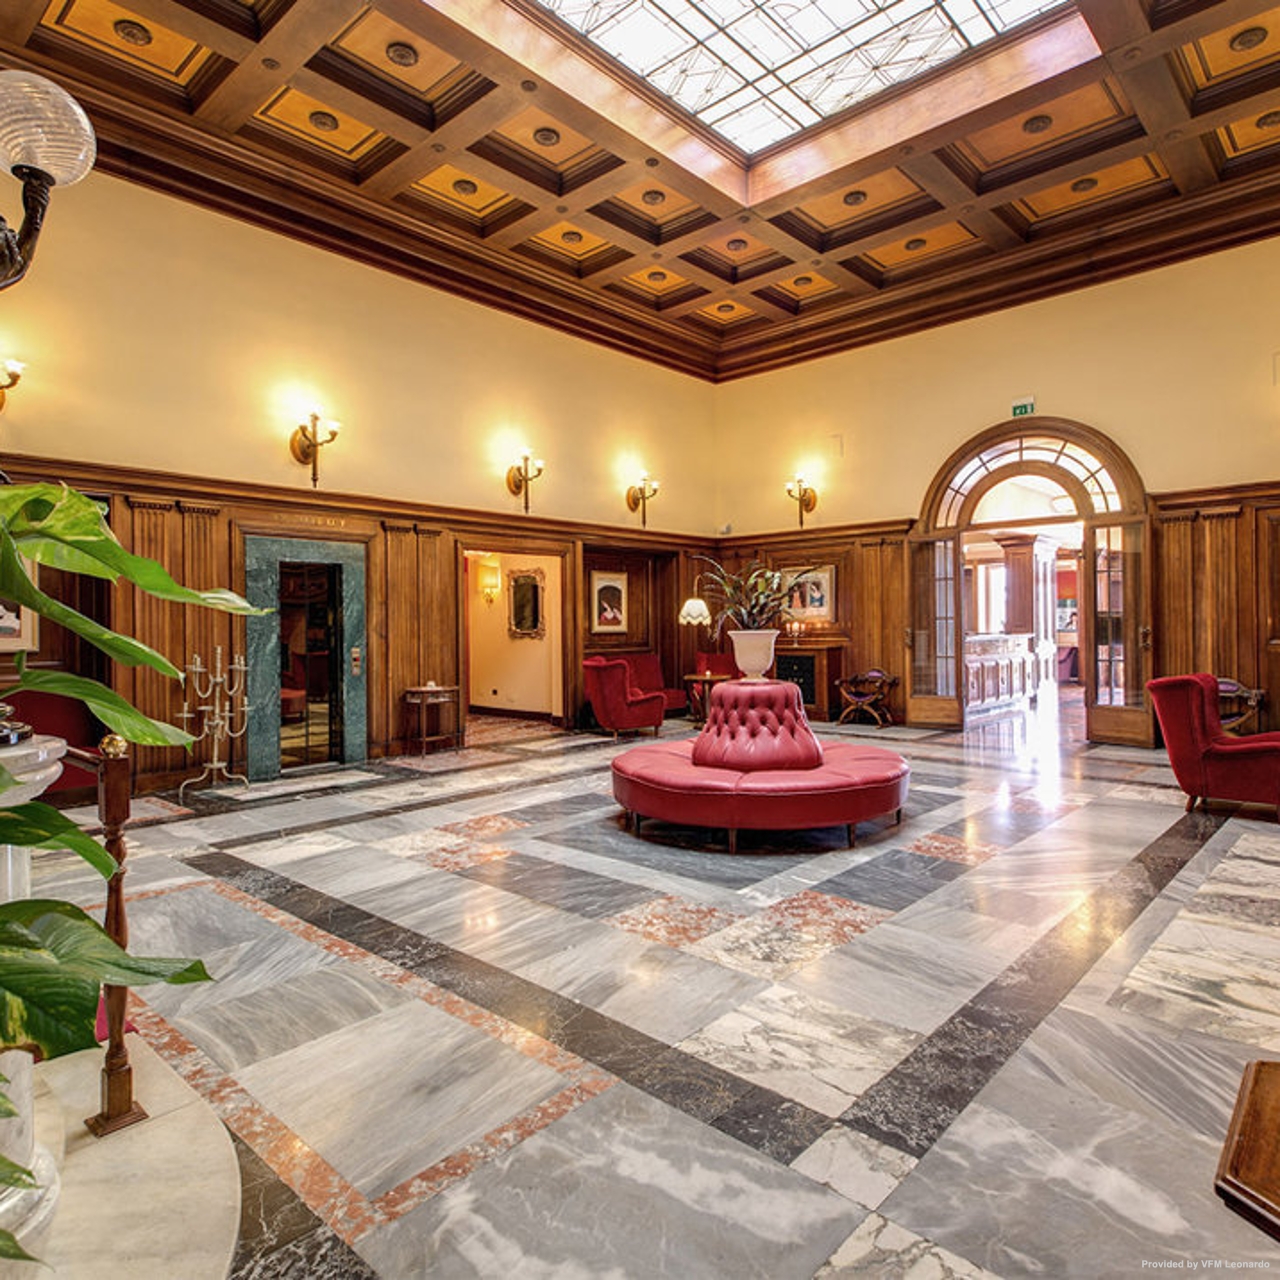 Villa Politi Grand Hotel - 4 HRS star hotel in Syracuse (Sicily)